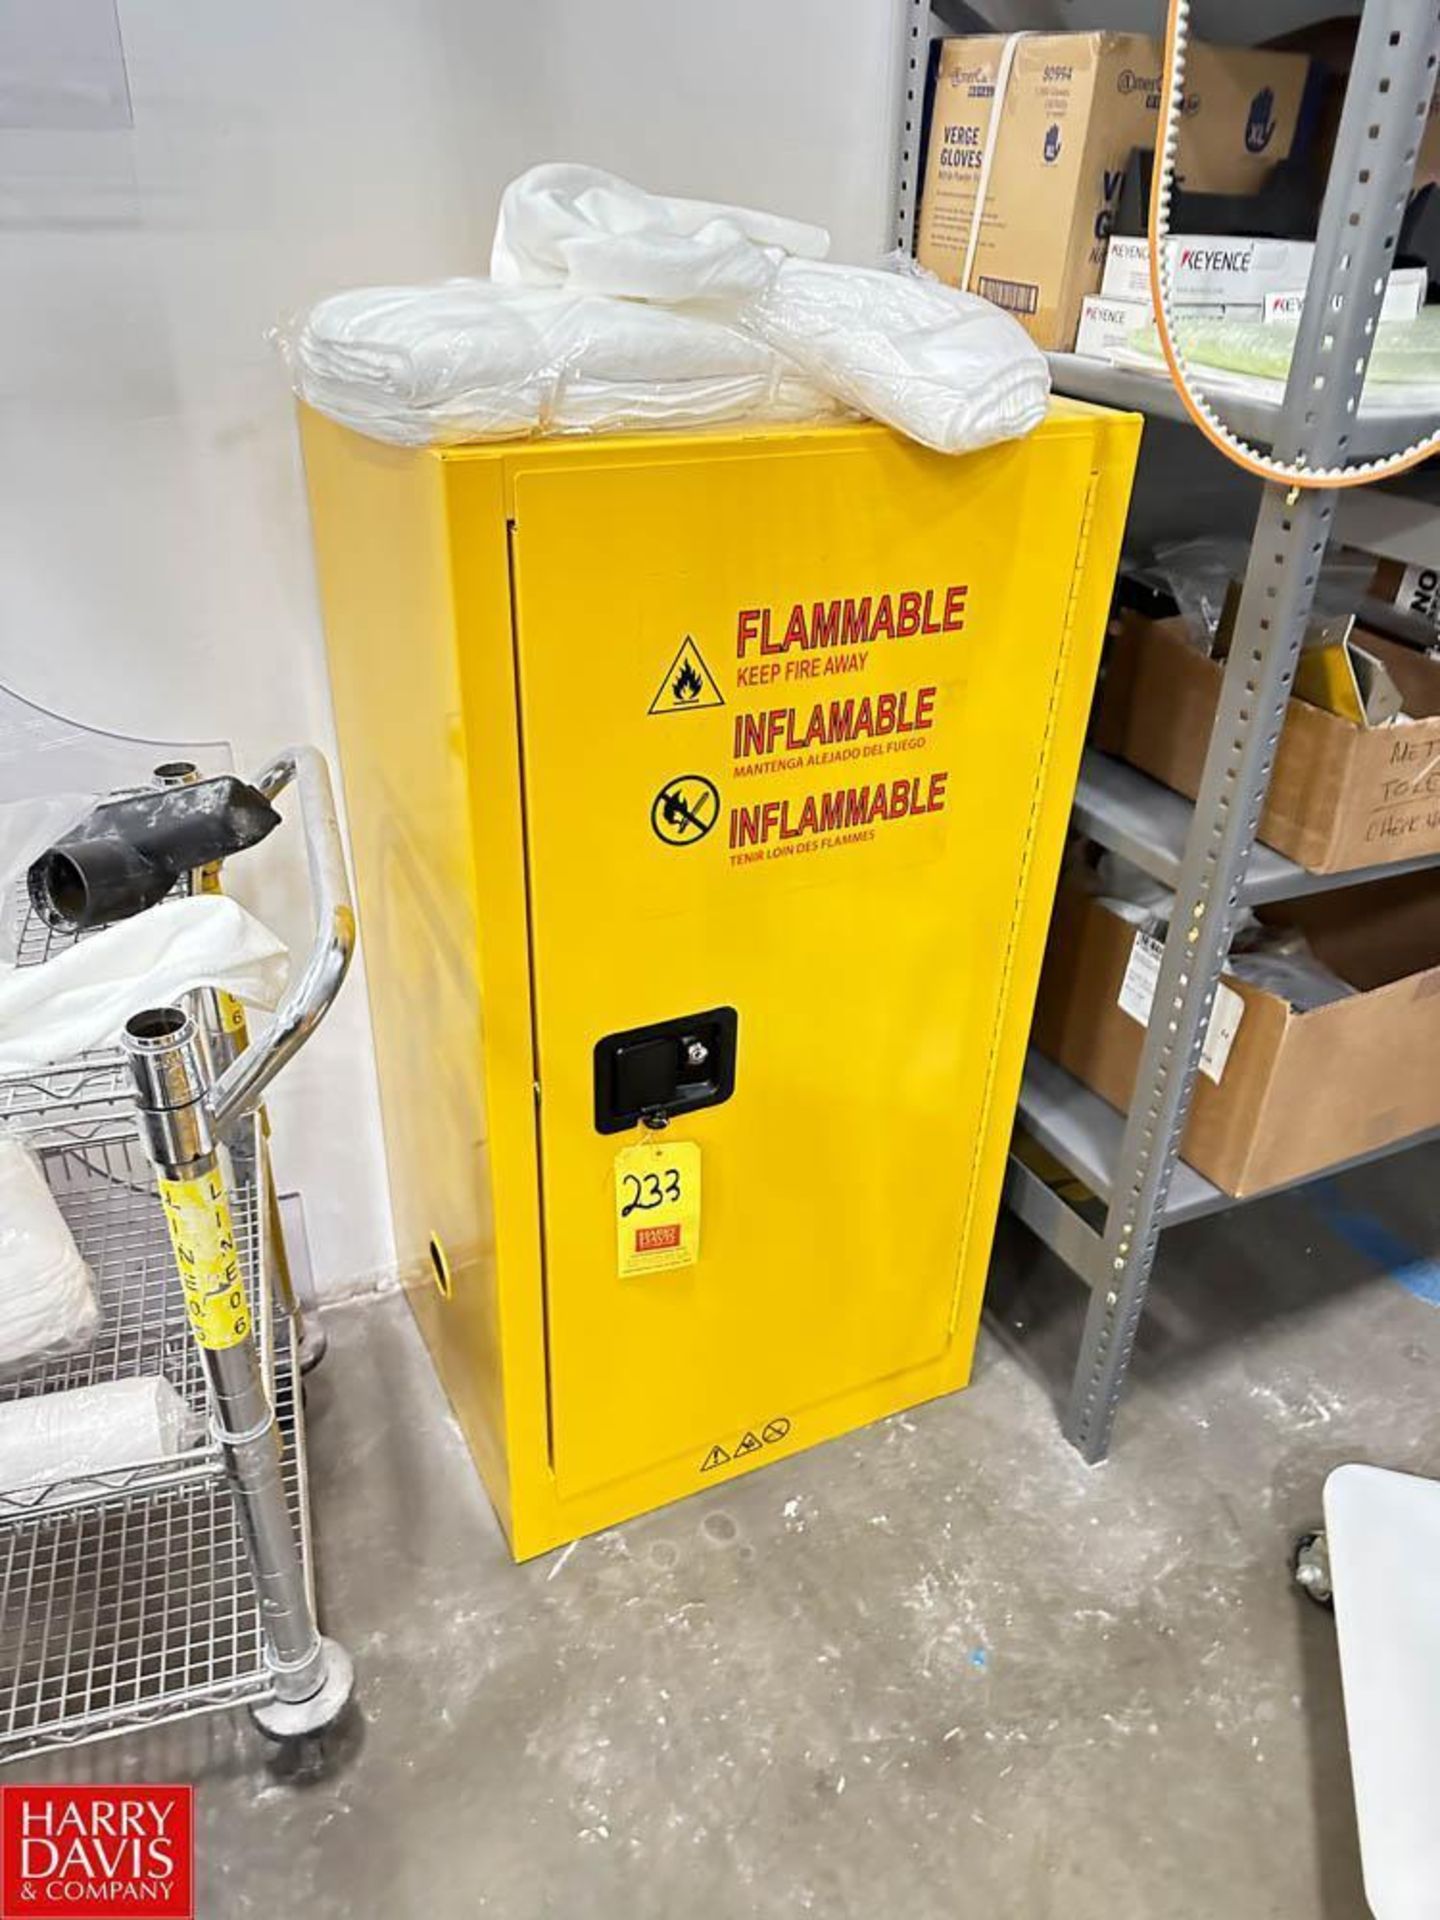 Condor 10 Gallon Flammable Storage Cabinet - Rigging Fee: $75